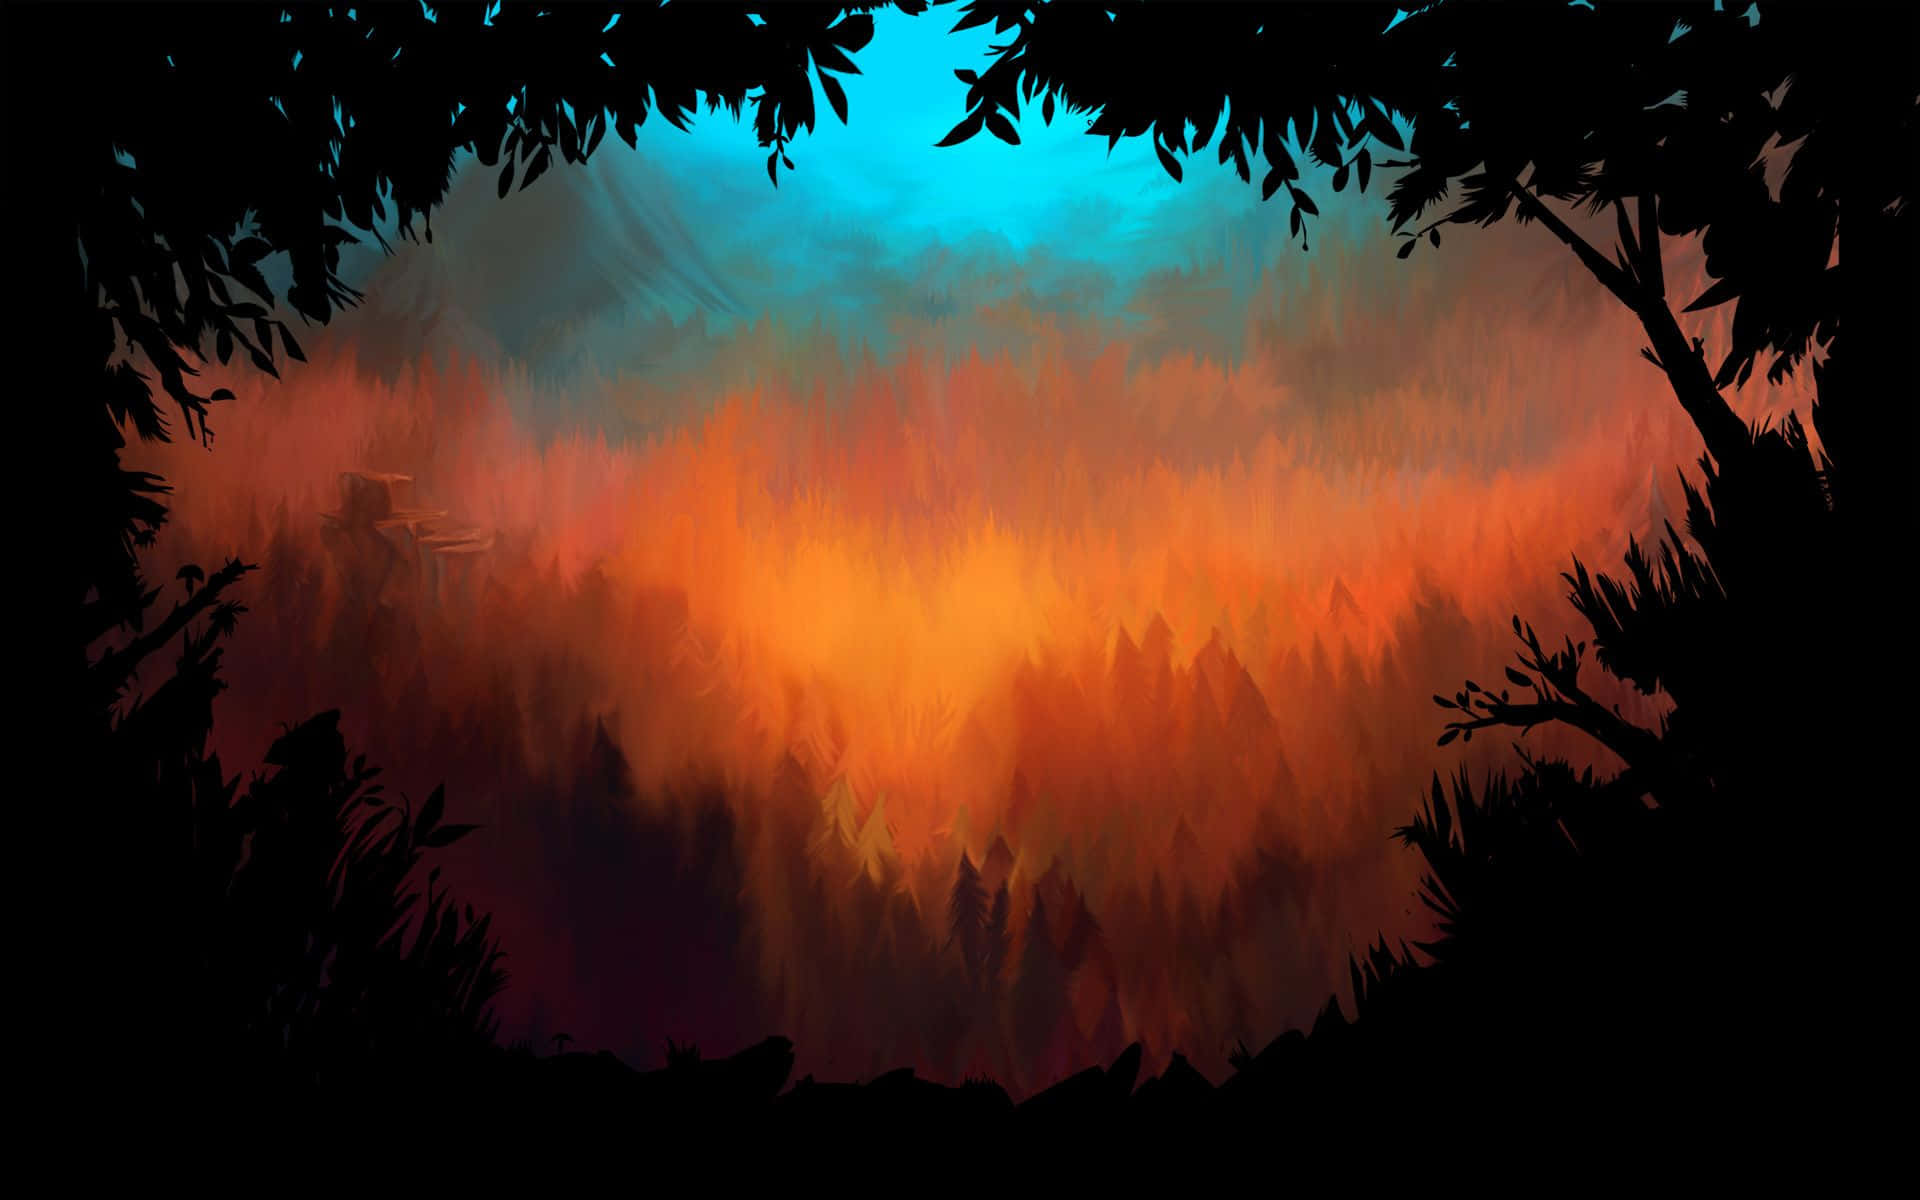 A Dark Forest With A Bright Orange Sky